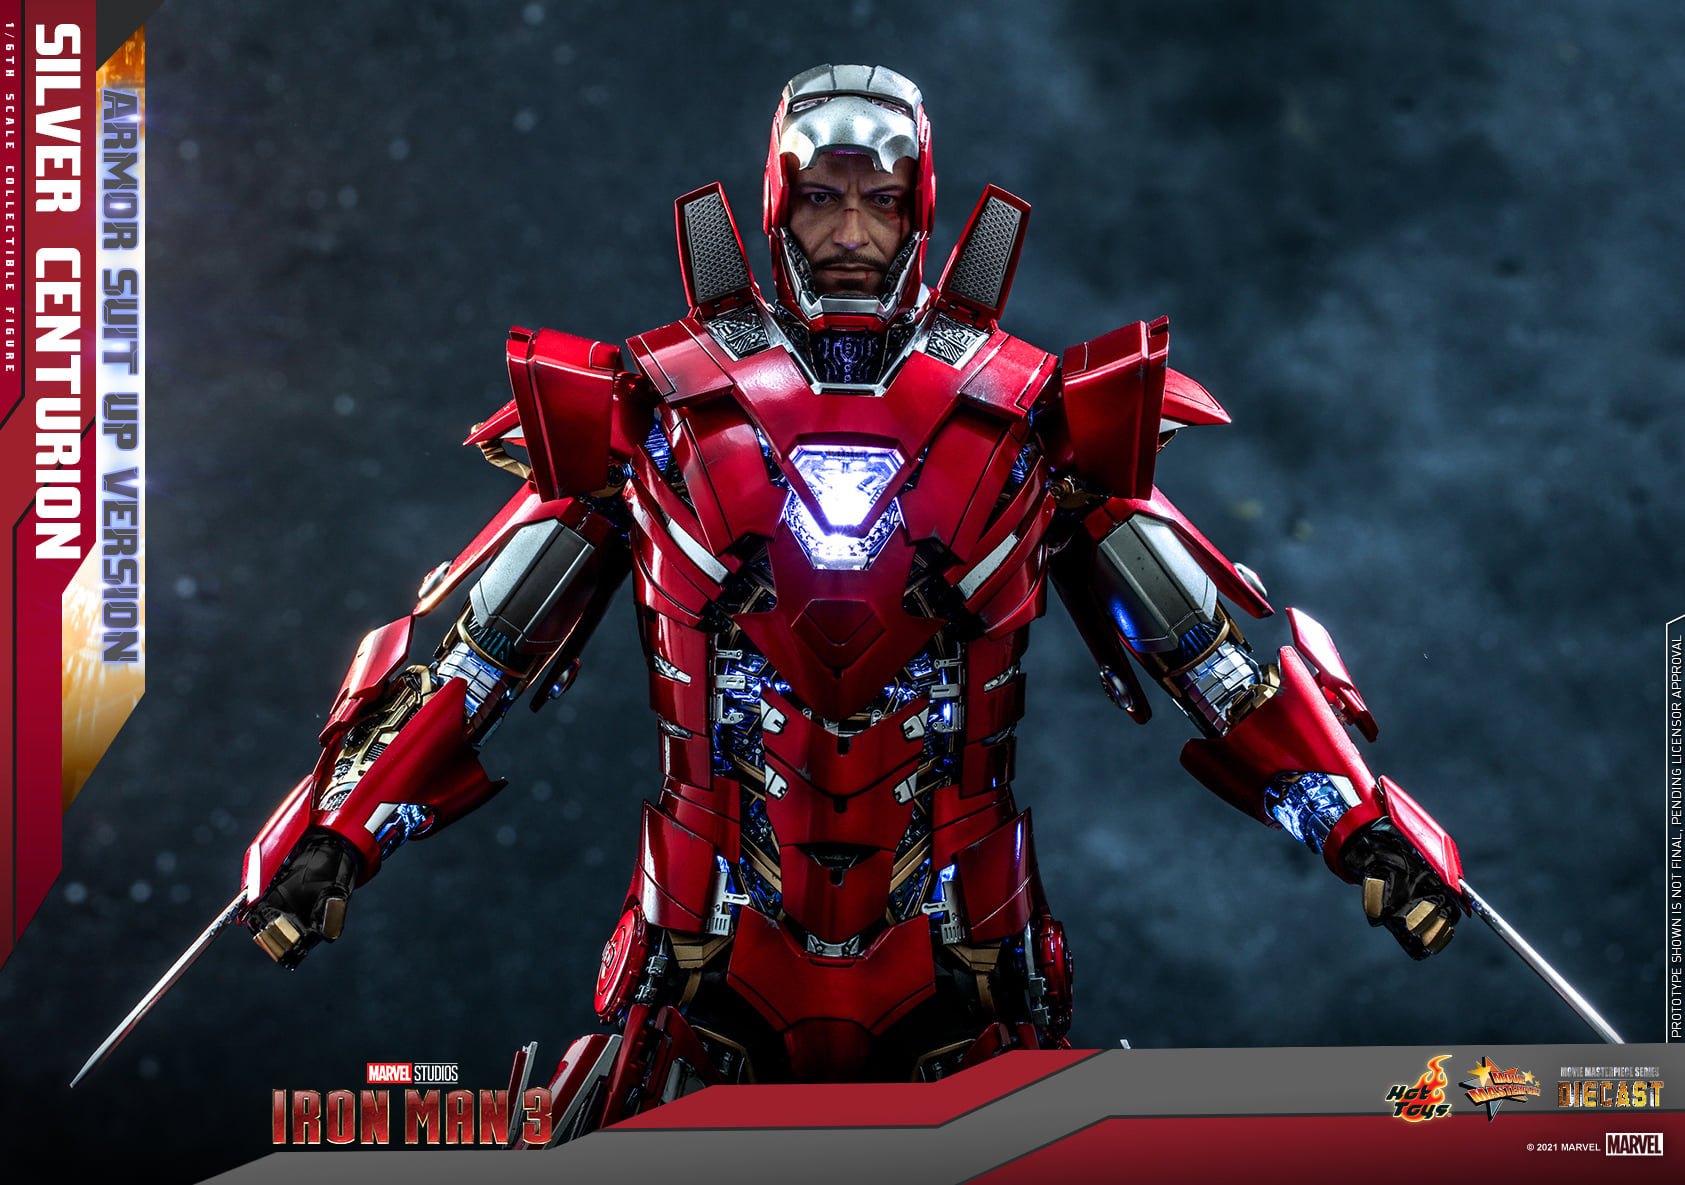 Hot Toys - MMS618D43 - Iron Man 3 - Mark XXXIII Silver Centurion (Armor Suit Up Ver.) - Marvelous Toys